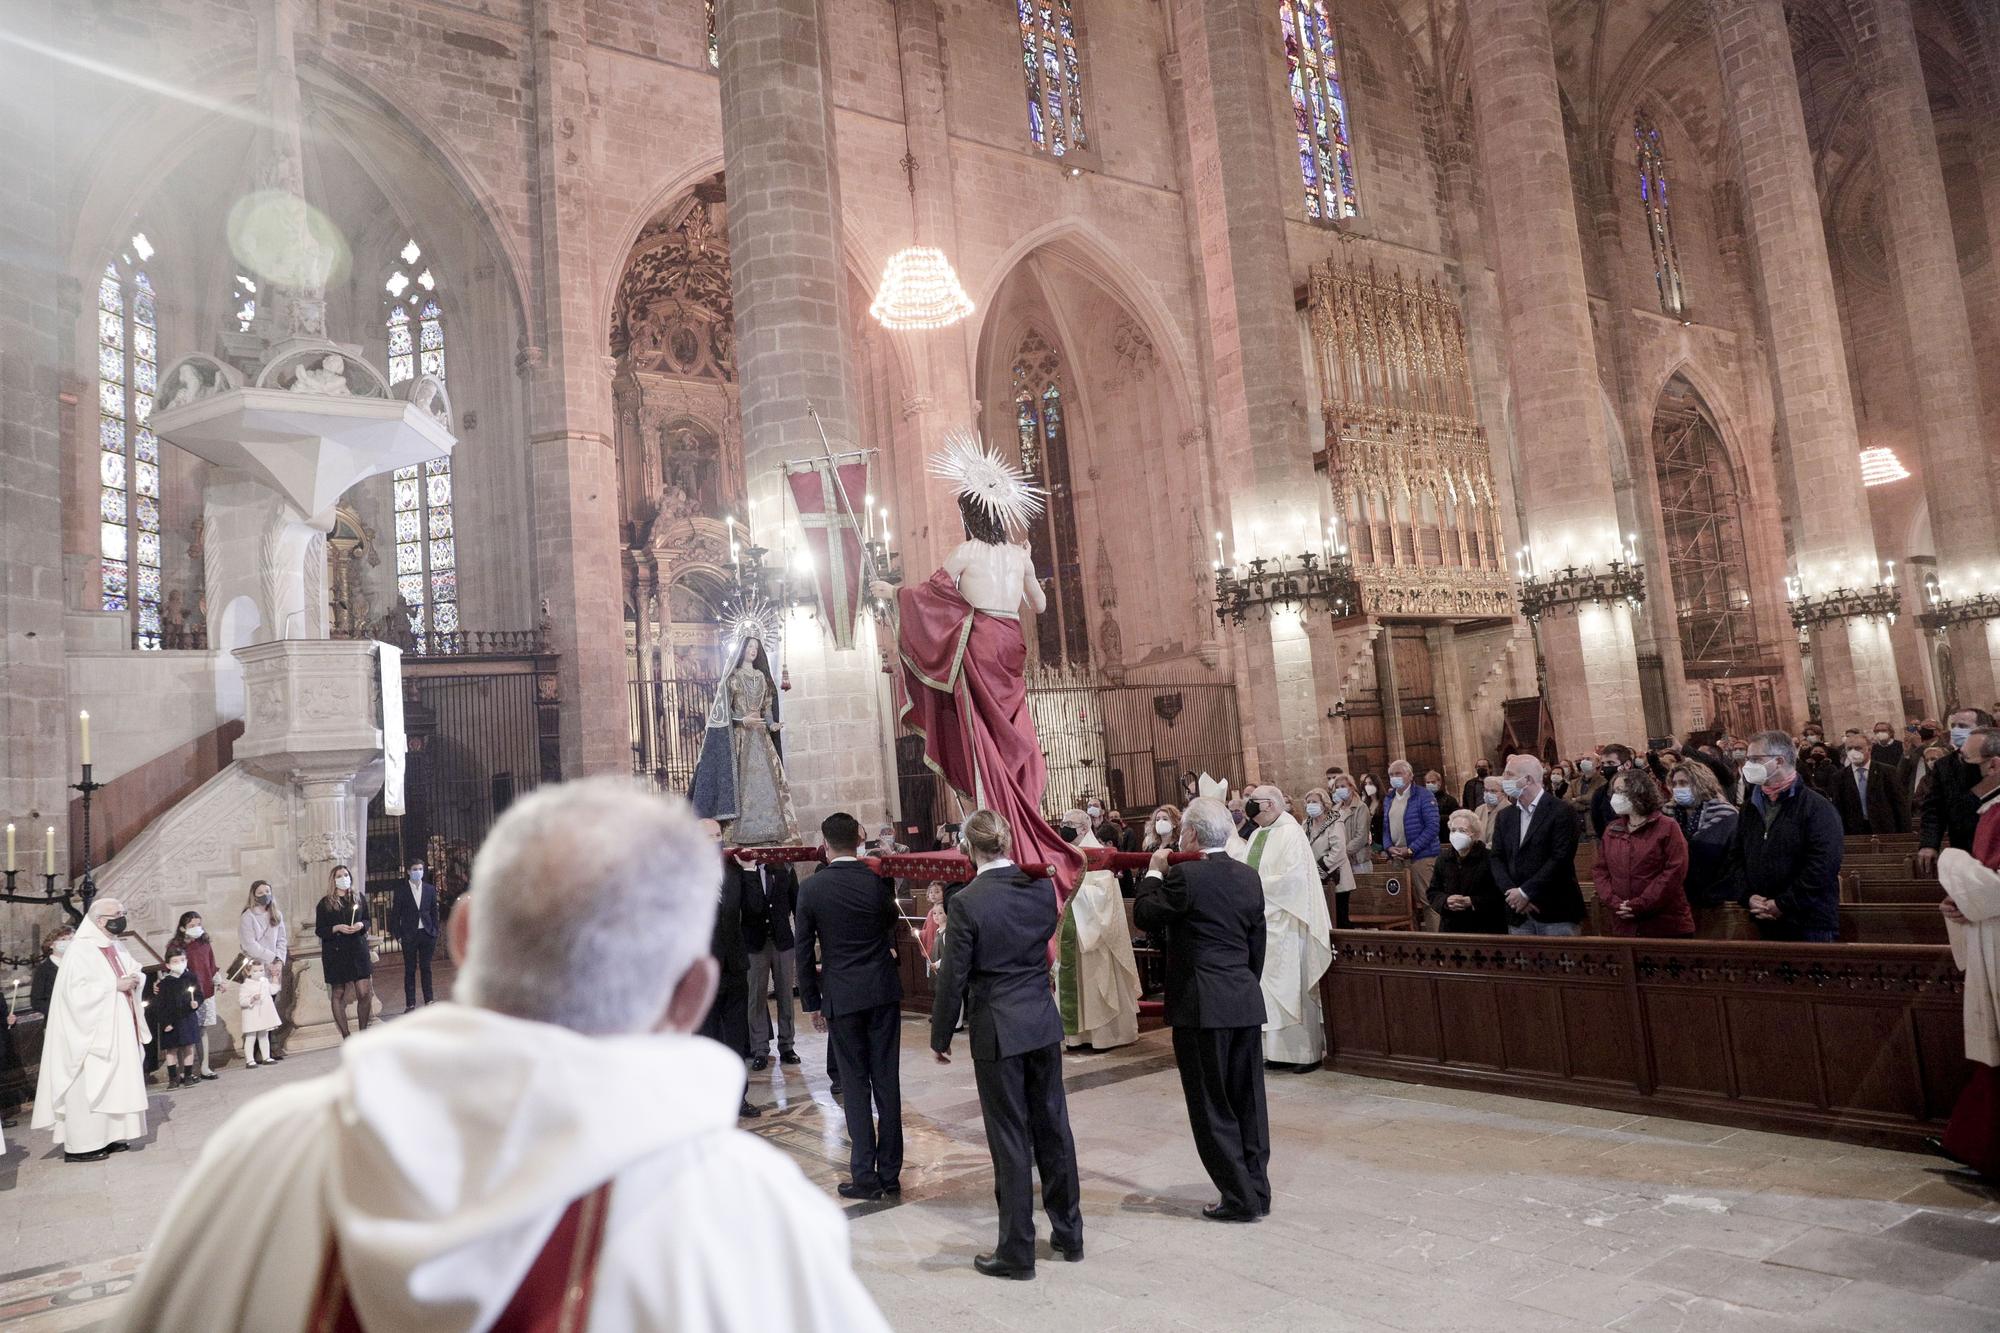 El obispo Taltavull preside la Misa de Pascua en la Catedral